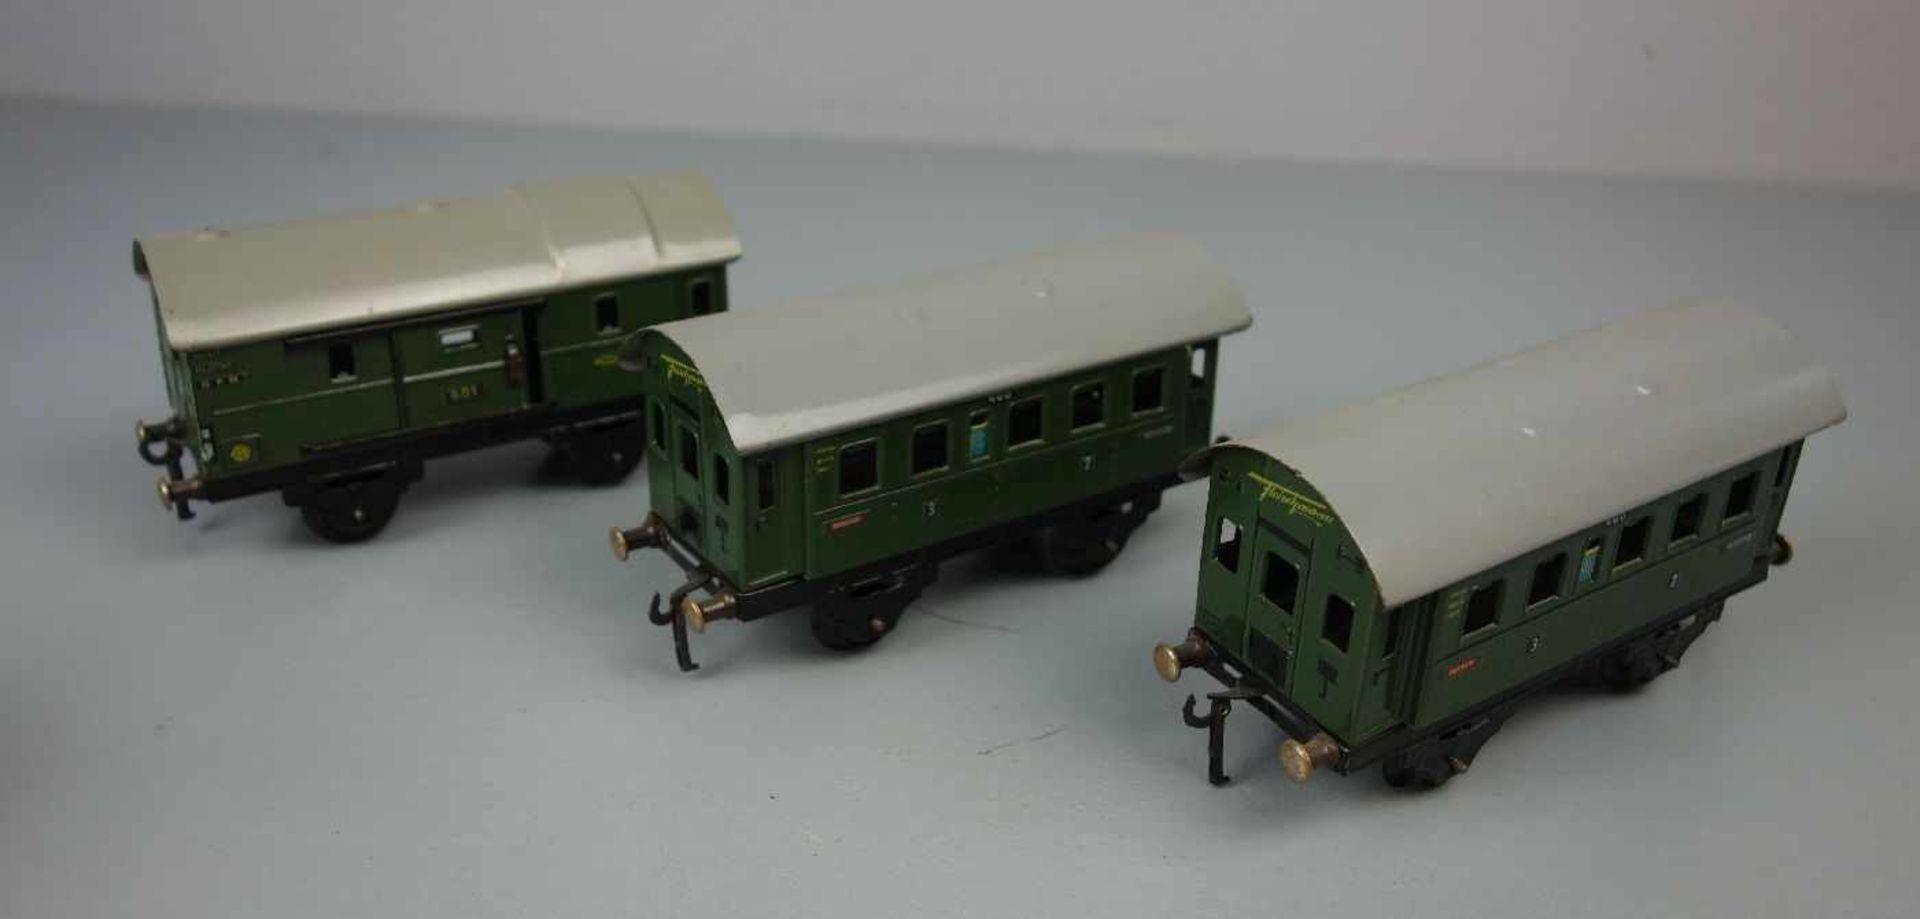 BLECHSPIELZEUG / EISENBAHN-SET: Dampflok-Set im Karton / tin toy railway, um 1950, Manufaktur - Bild 5 aus 12